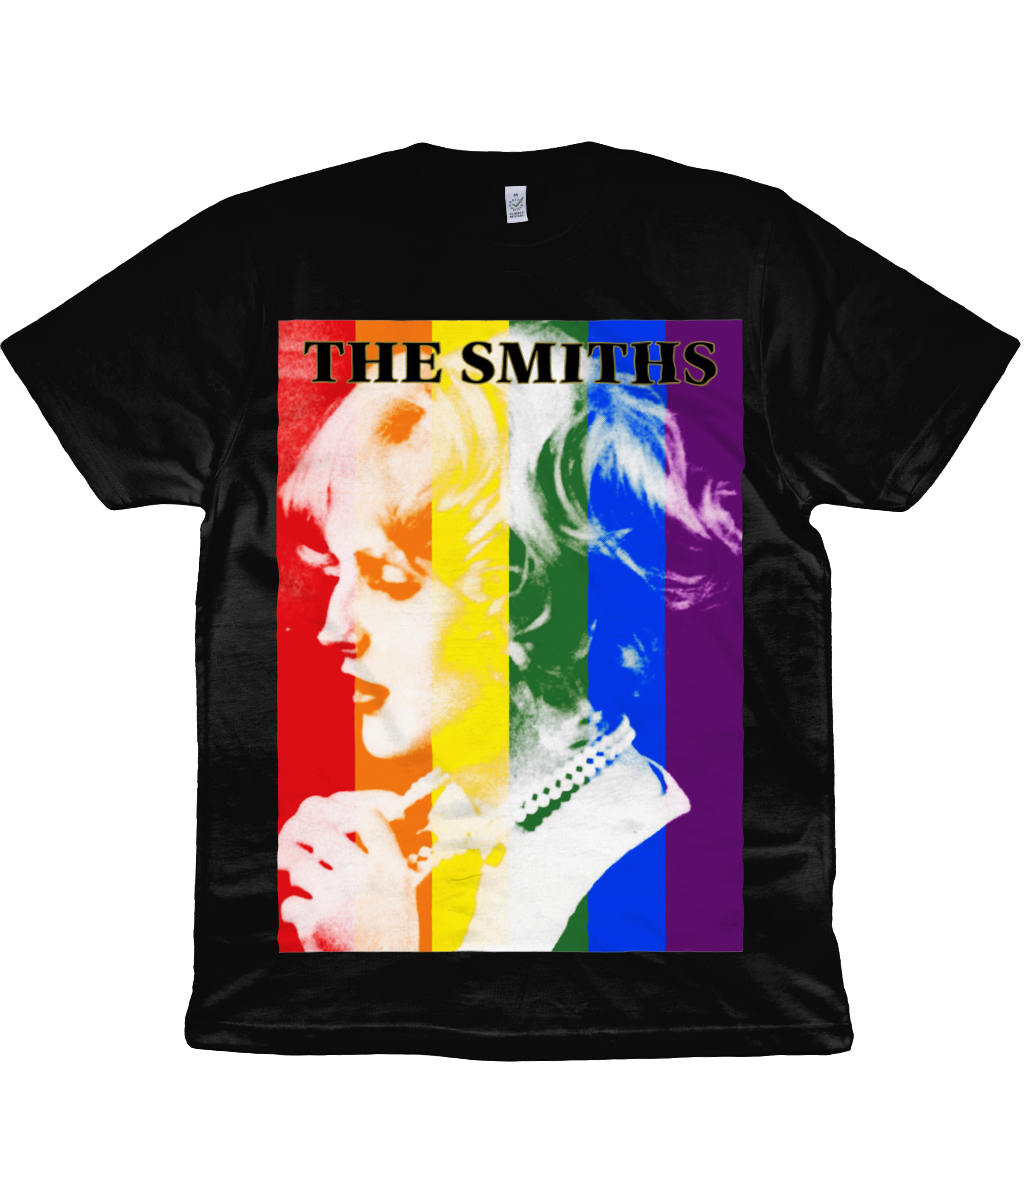 THE SMITHS - SHEILA TAKE A BOW - Candy Darling - Rainbow